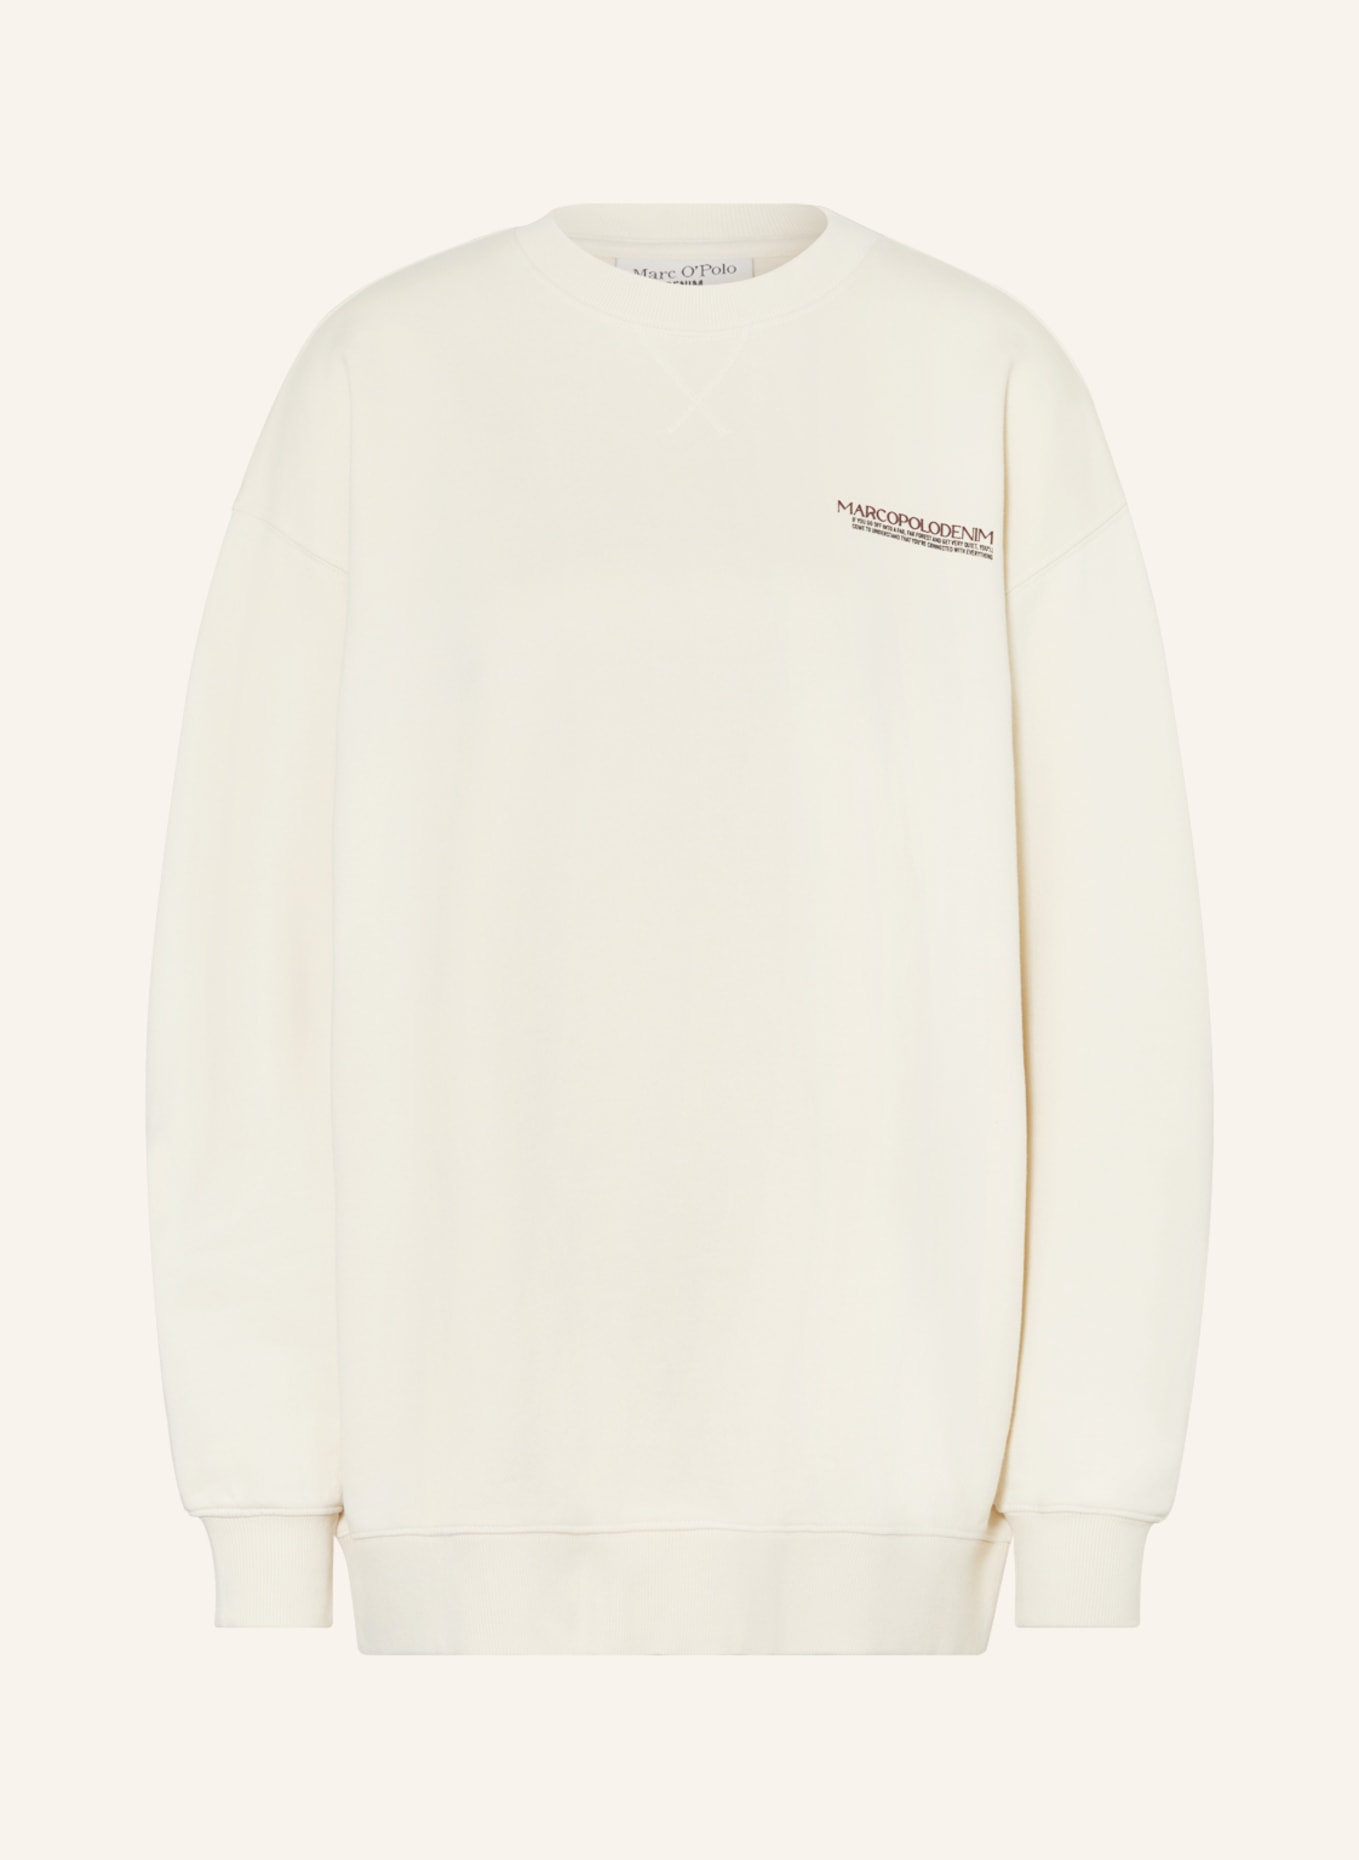 Marc O'Polo DENIM Oversized-Sweatshirt, Farbe: 121 white blush (Bild 1)